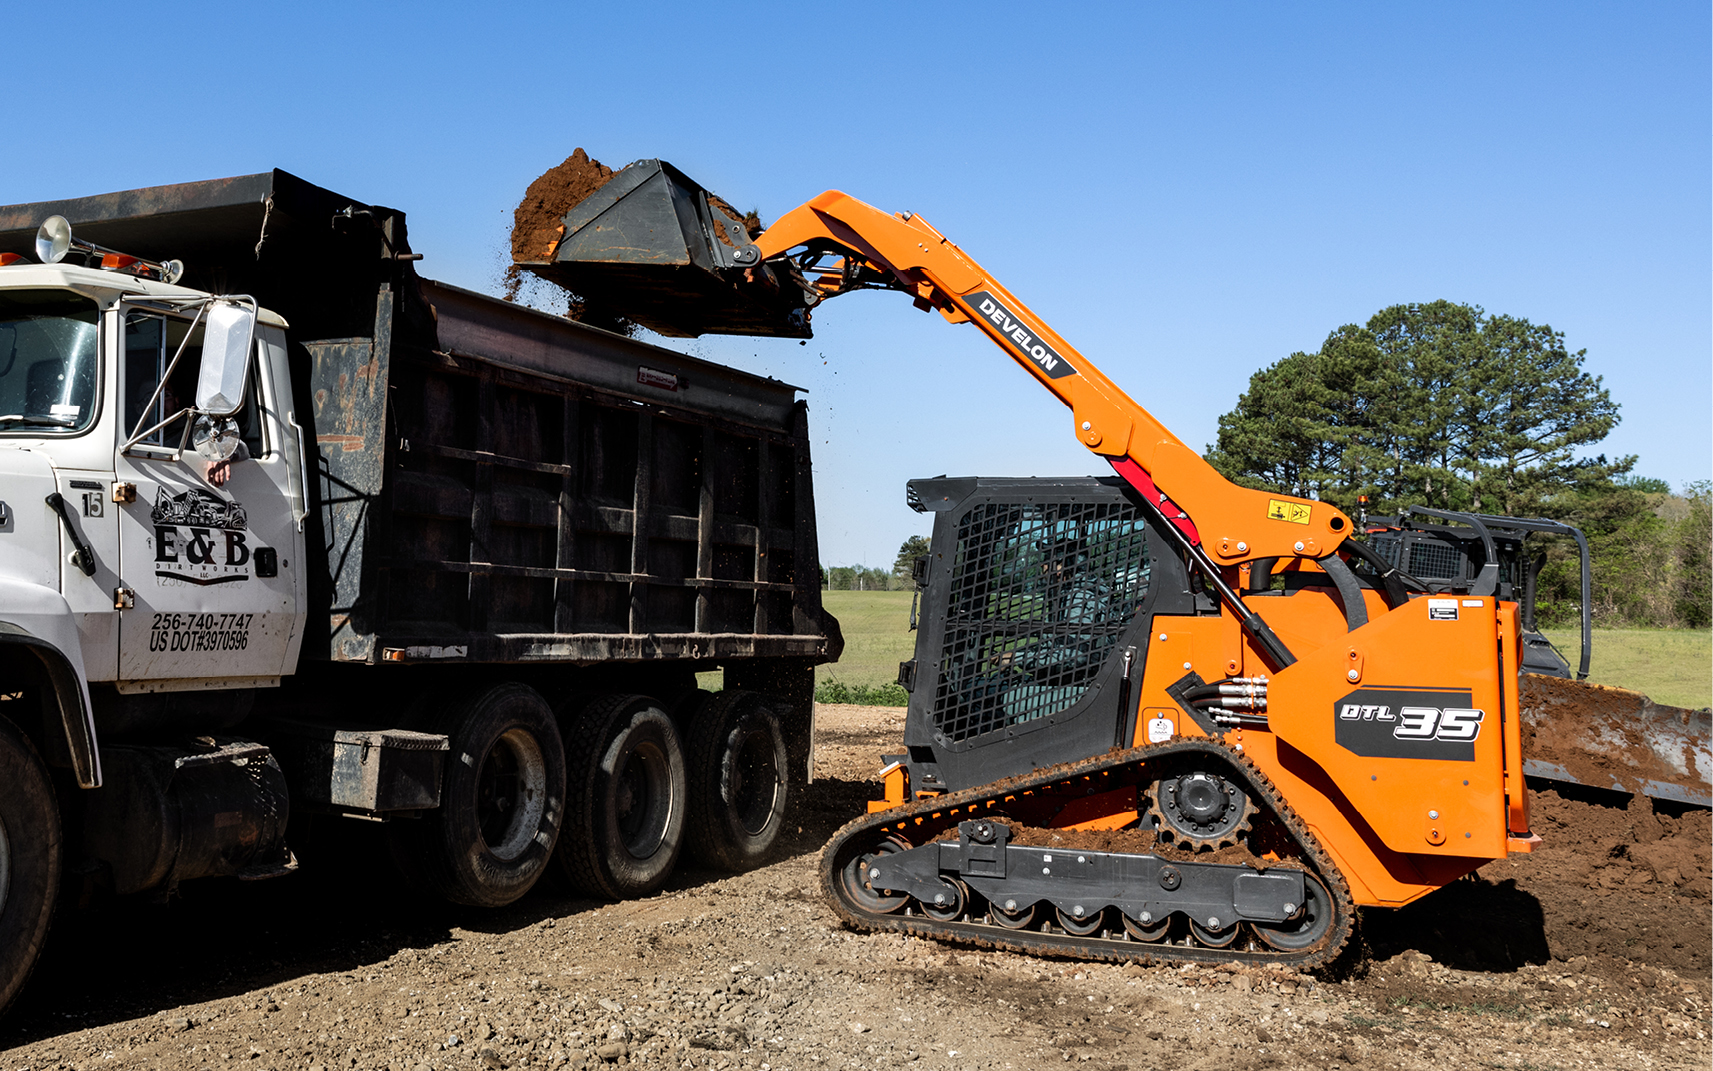 DEVELON DTL35 compact track loader dumping dirt into a high-sided dump truck.